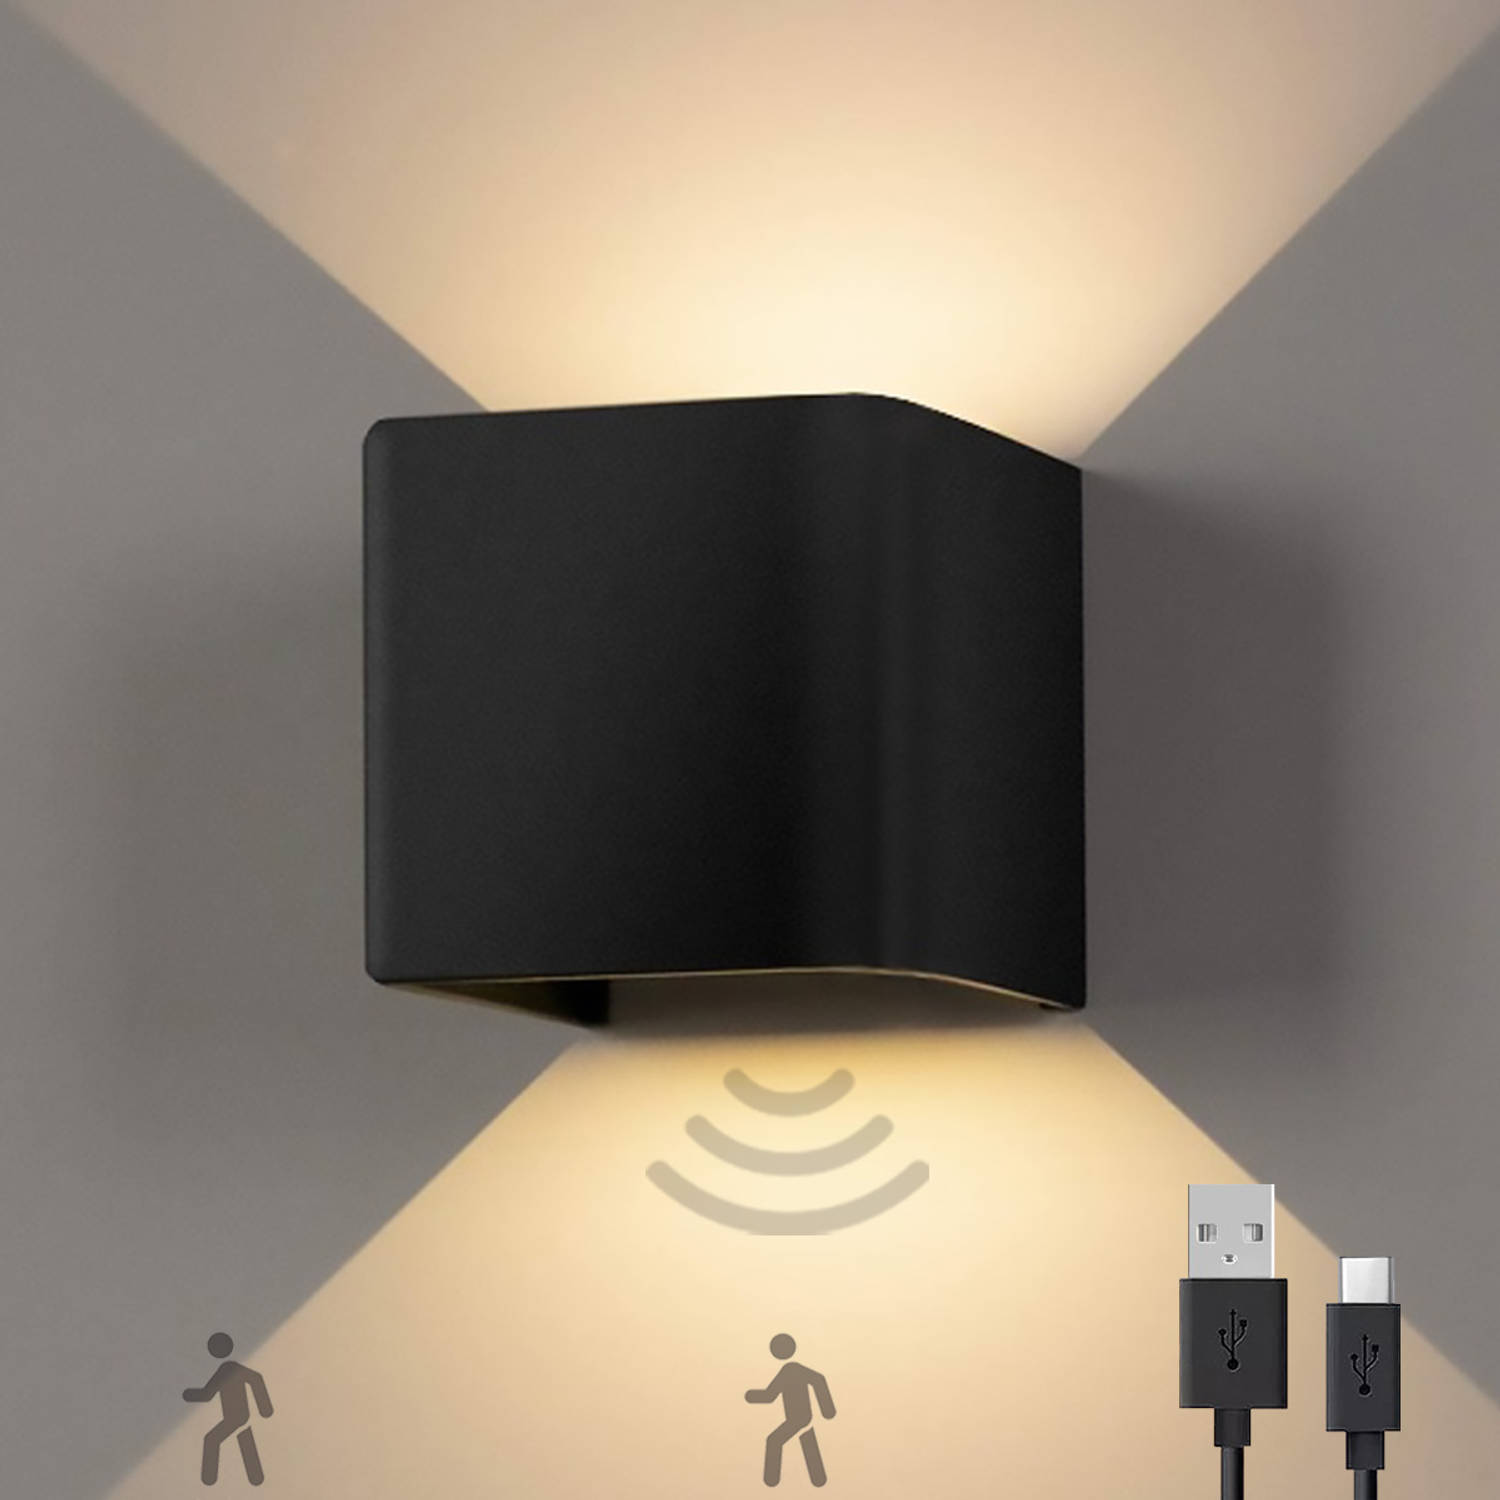 Goliving Oplaadbare Wandlamp Op Accu – Wandlamp Binnen – Draadloos - Krachtige Accu – PIR Bewegingssensor – USB-C – 4400 mAh - Warm Wit Licht - Zwart